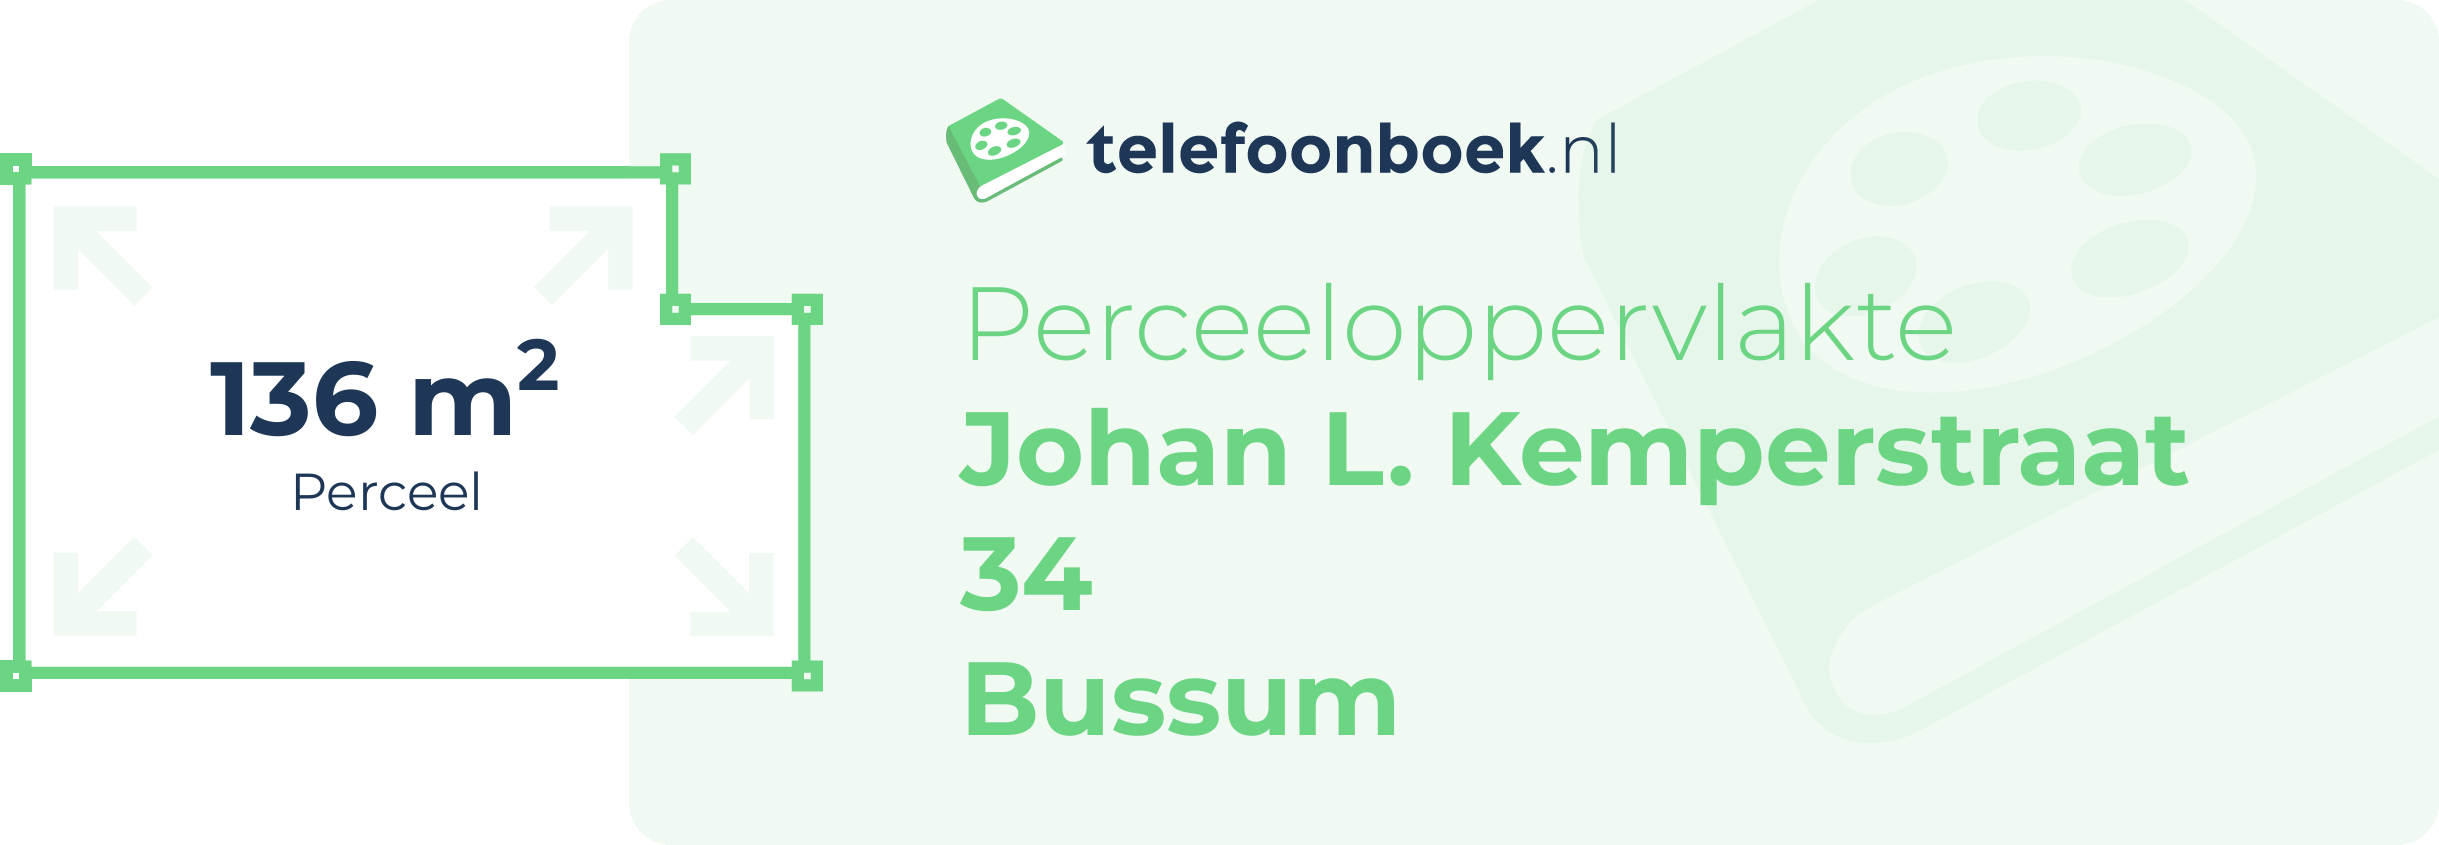 Perceeloppervlakte Johan L. Kemperstraat 34 Bussum